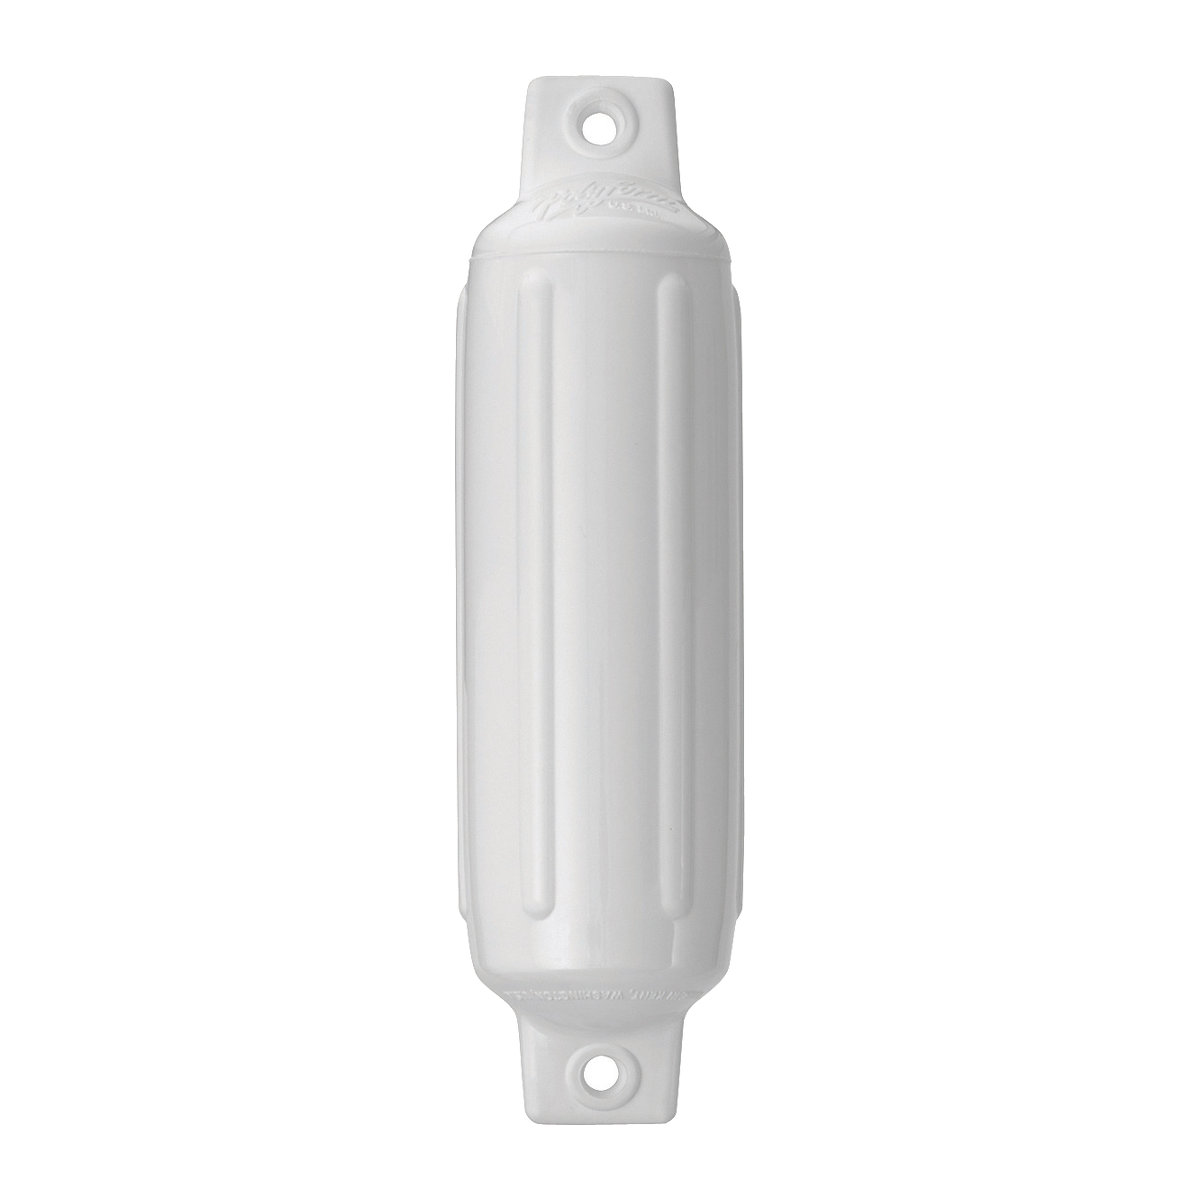 Polyform pare-battage type G-1 - blanc, 33 x 8,9cm